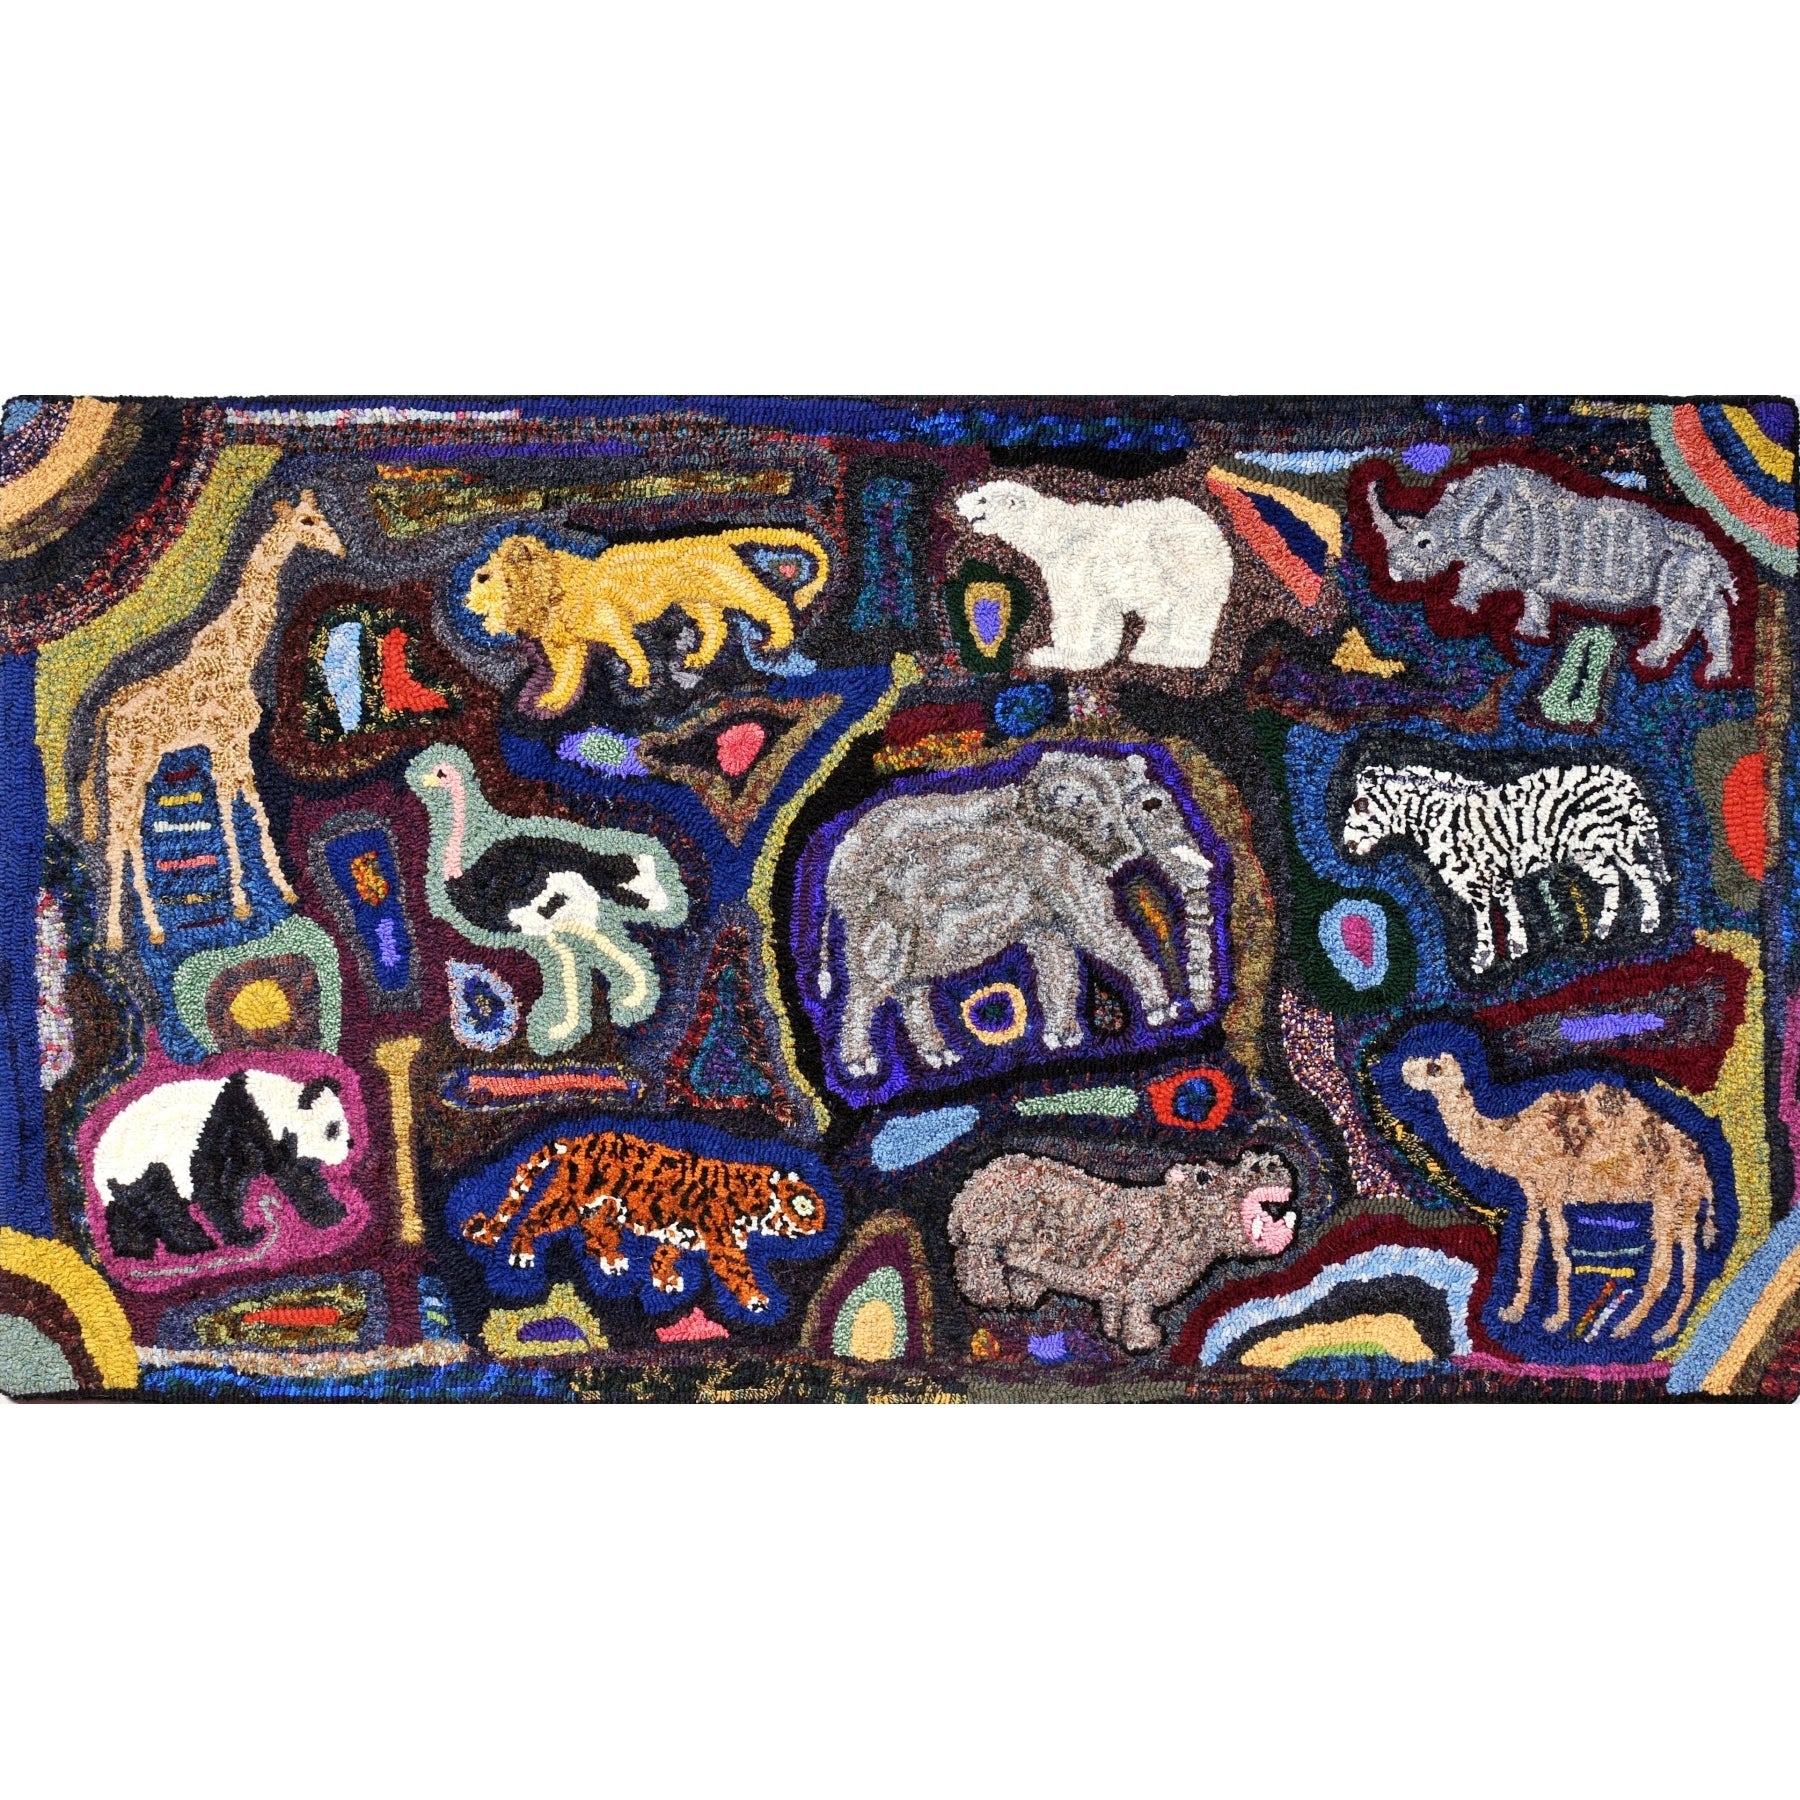 Primitive Zoo Animals, rug hooked by John Leonard